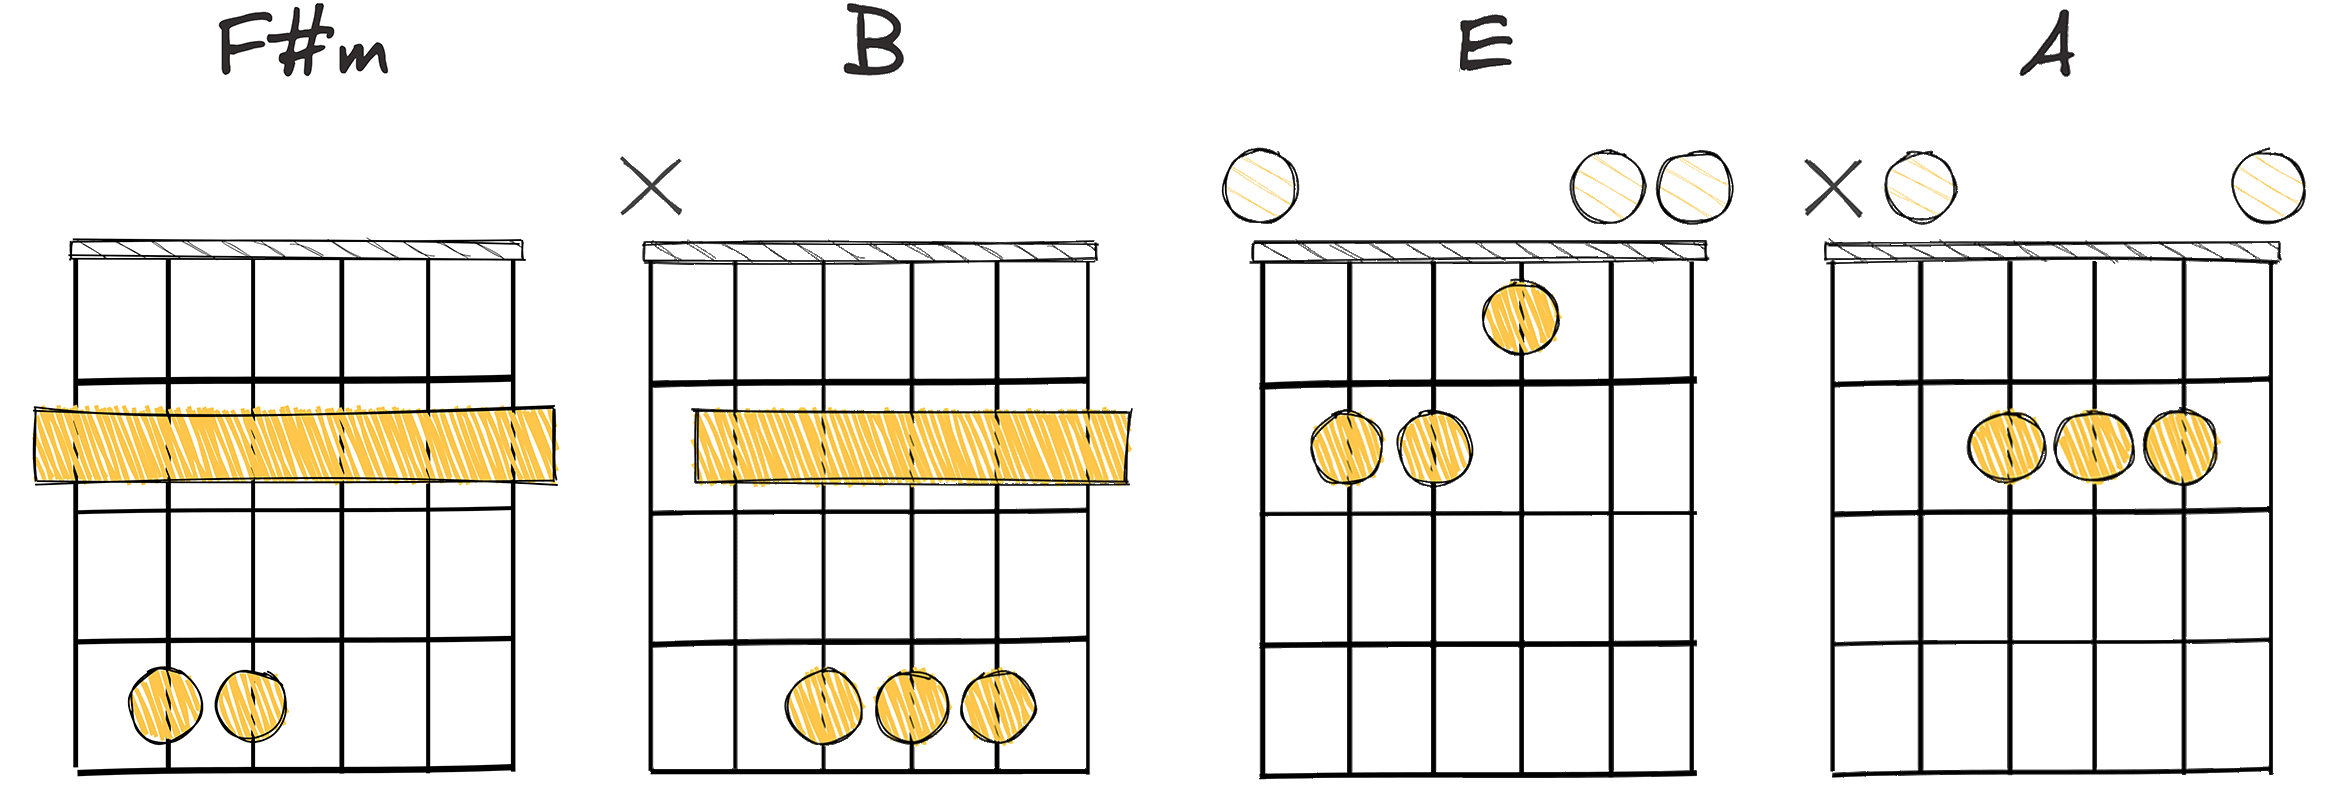 ii - V - I - IV (2 - 5 - 1 - 4) chords diagram